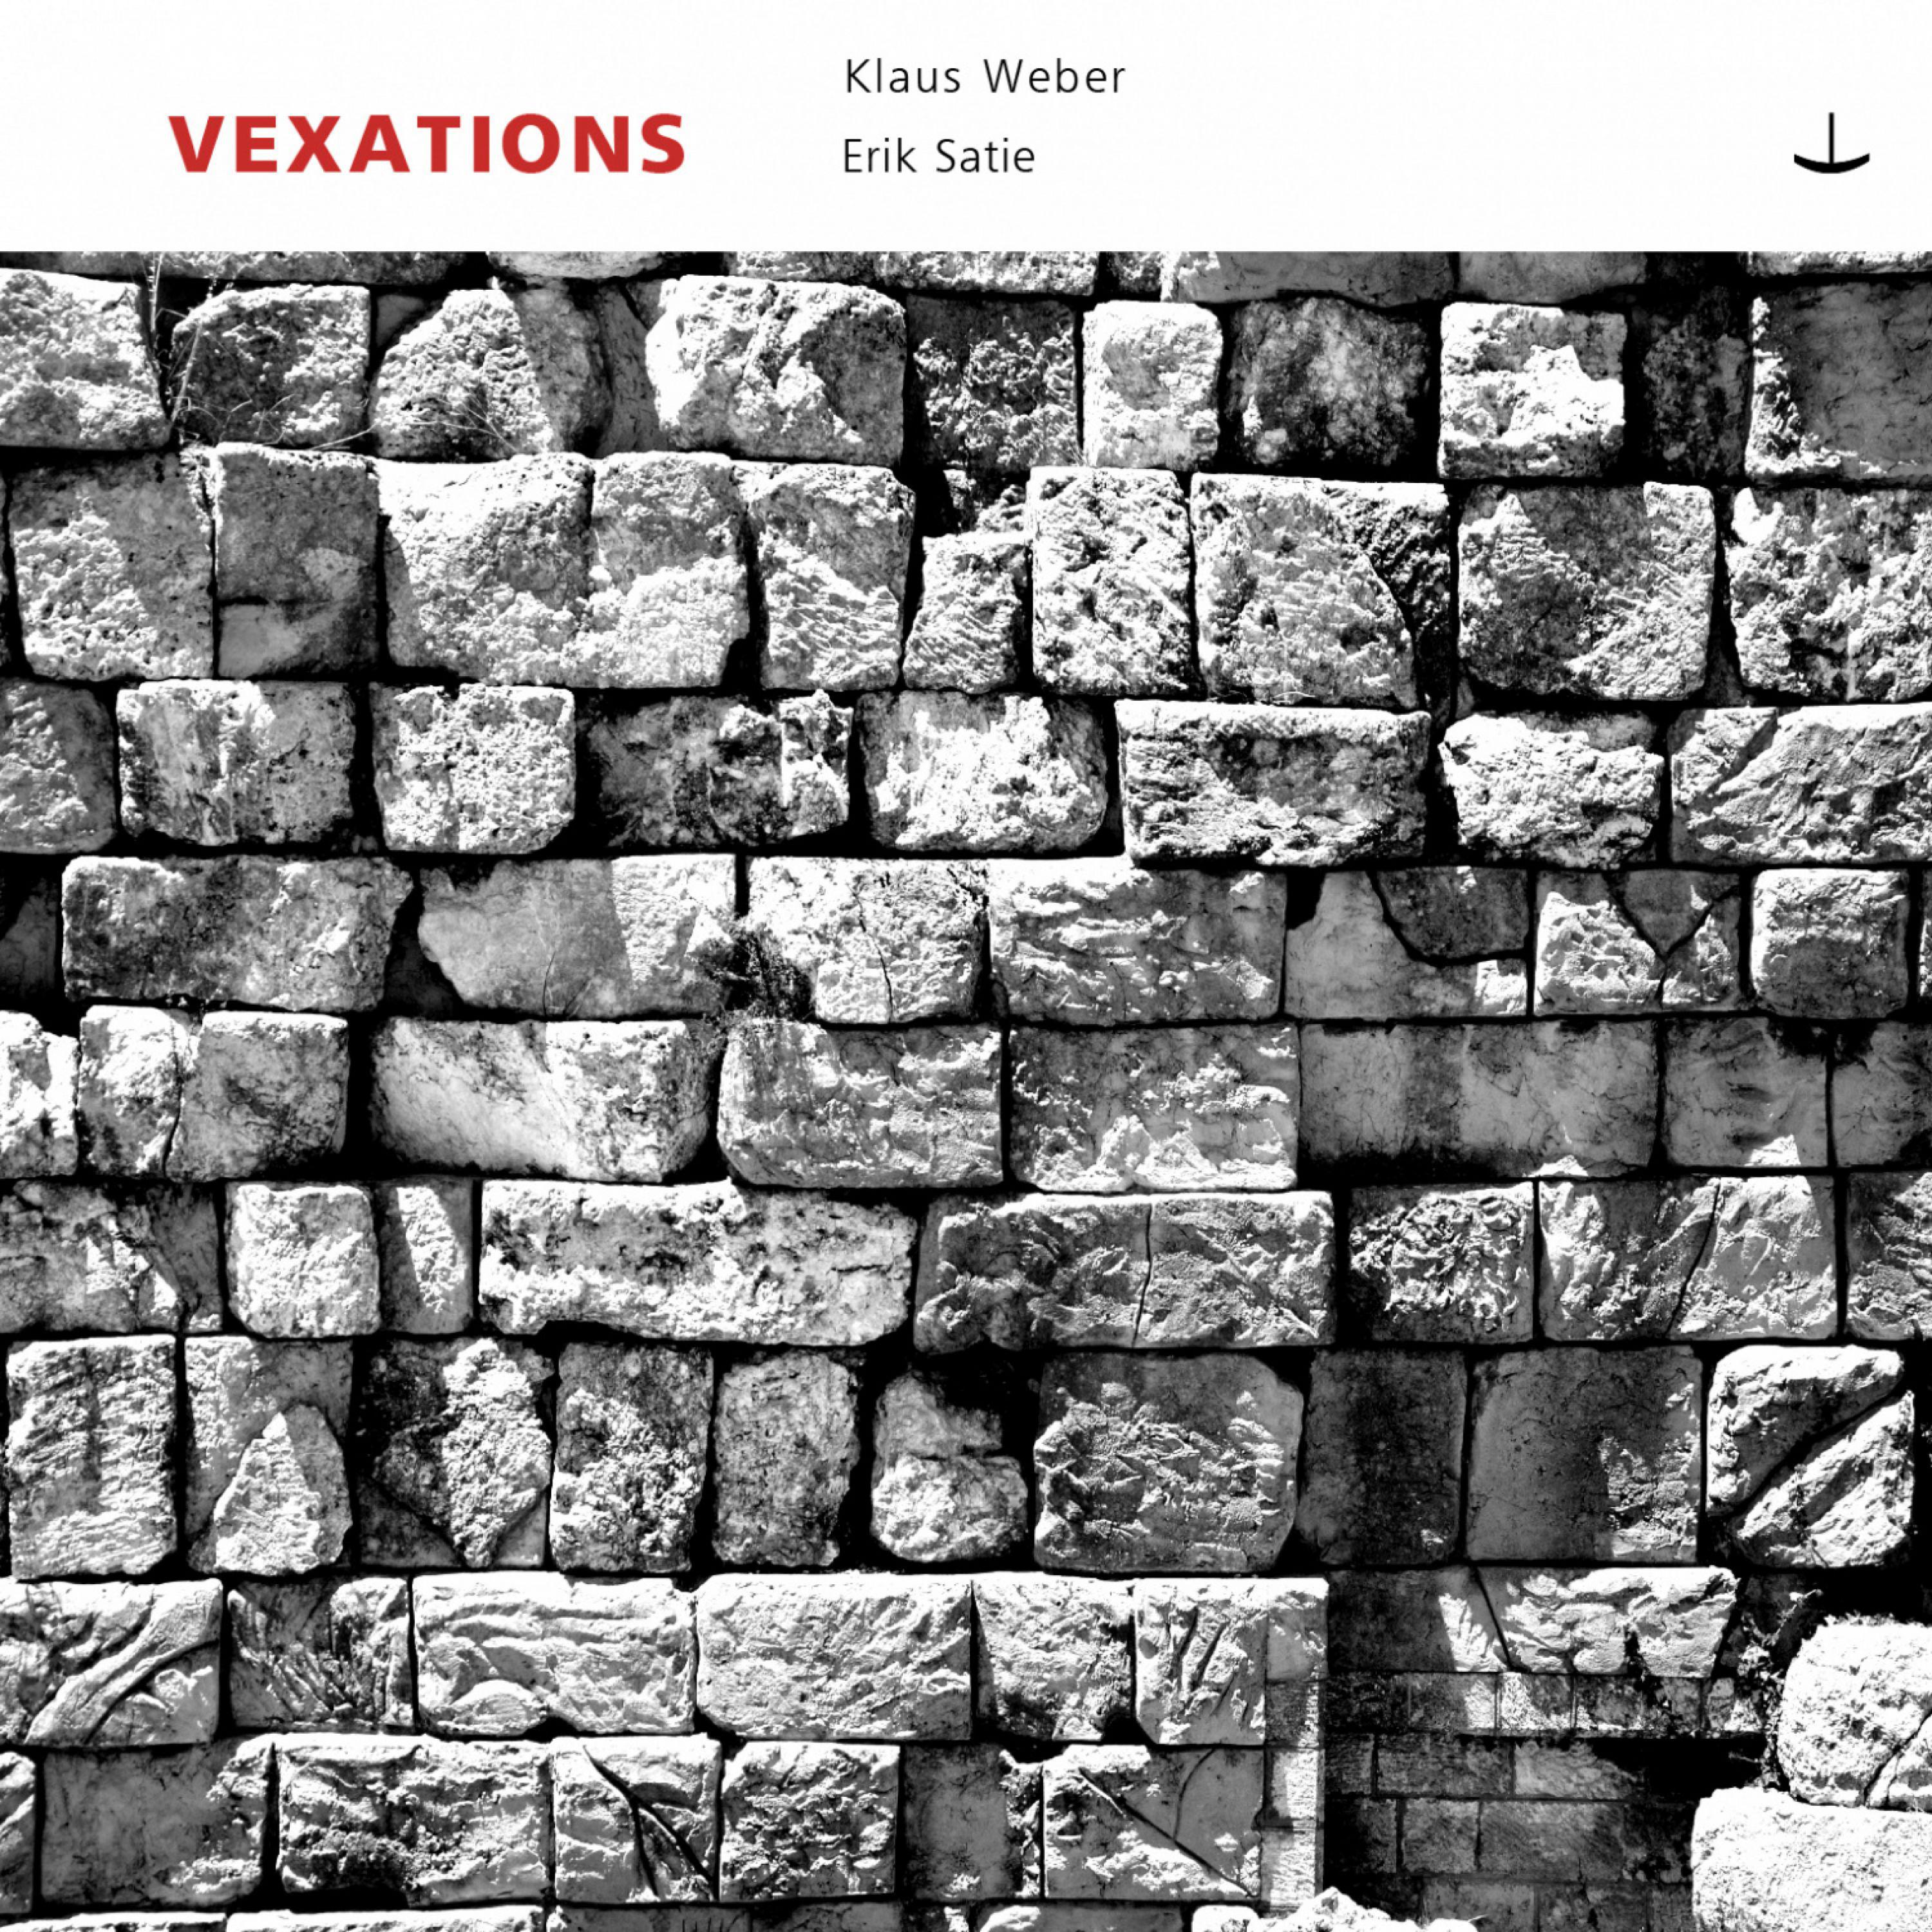 Klaus Weber - Vexations: Stürze, Abgründe, Inferno